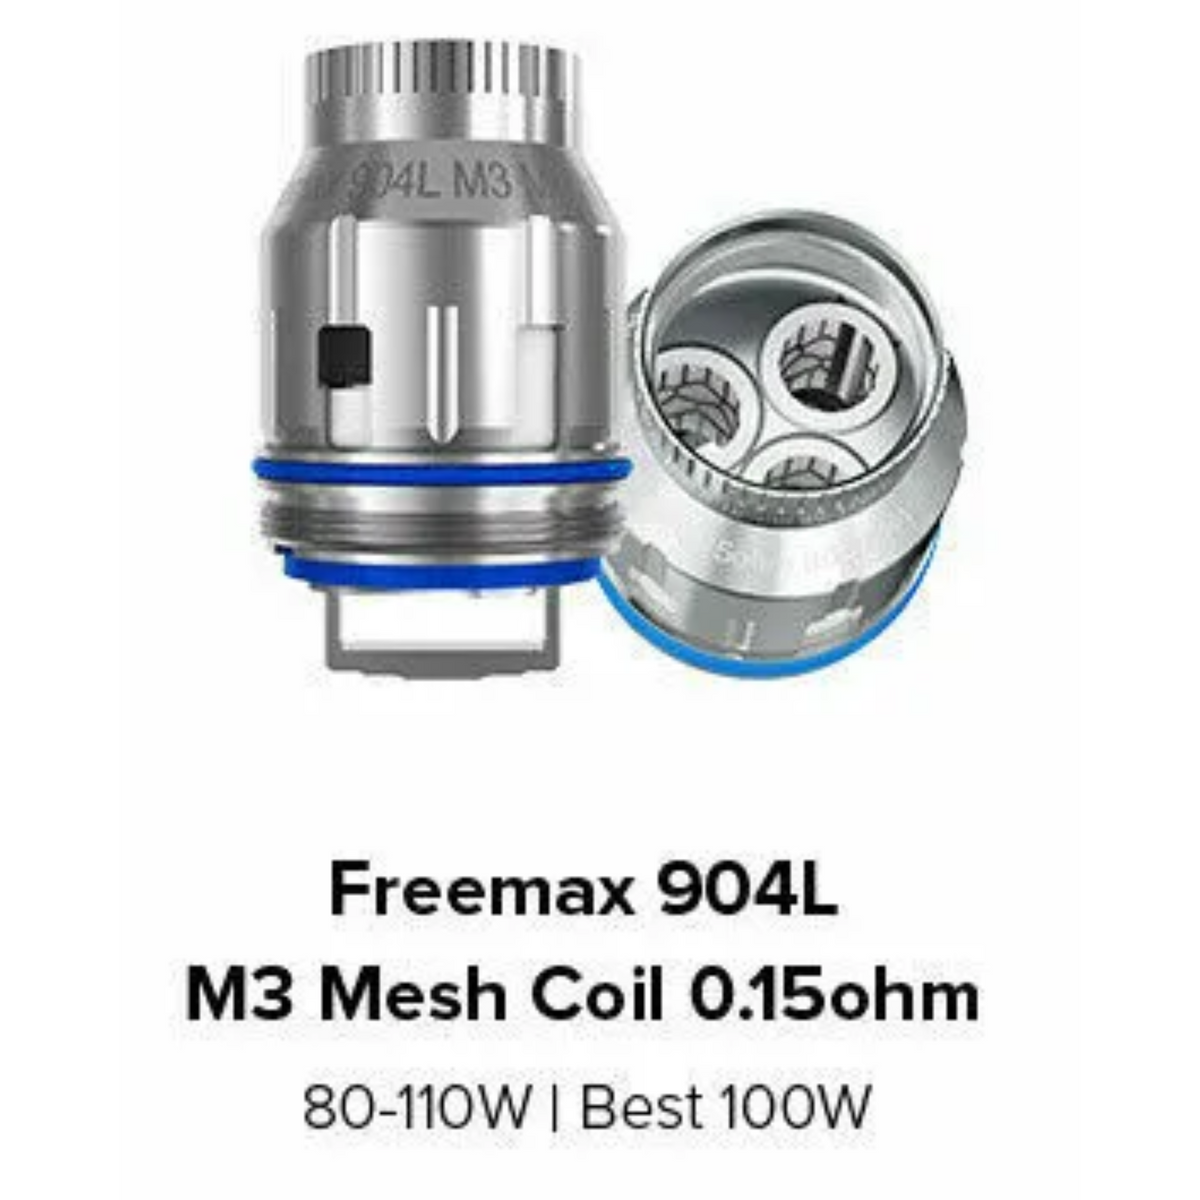 Freemax Pro 2 M3 Mesh Coil